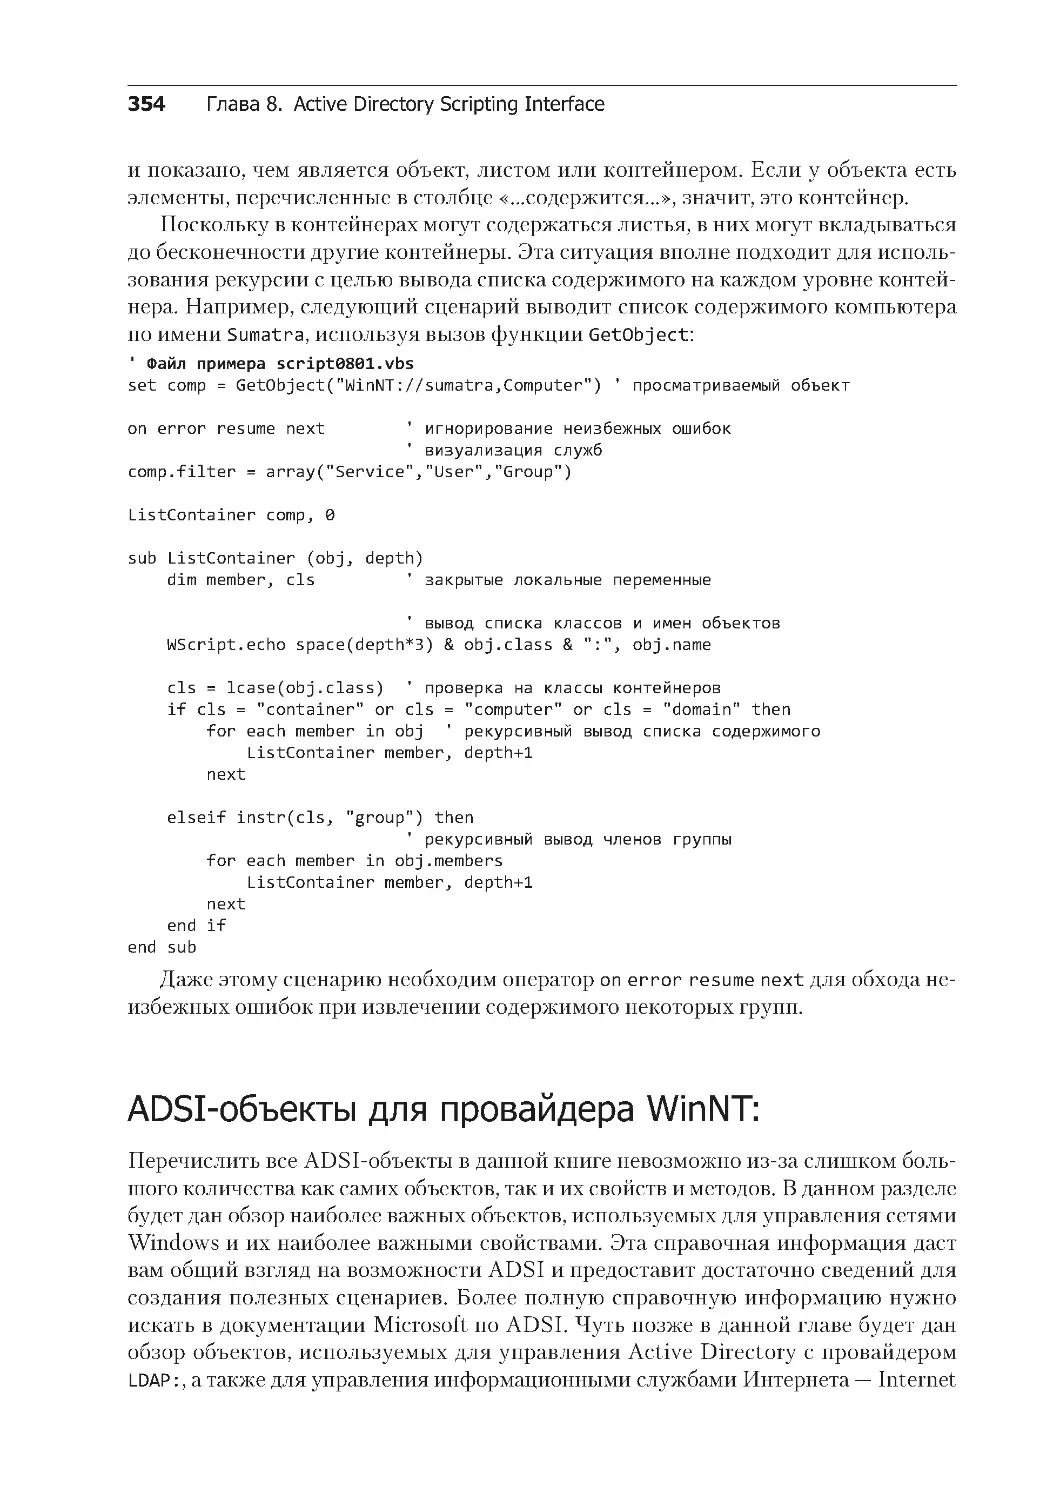 ADSI-объекты для провайдера WinNT: